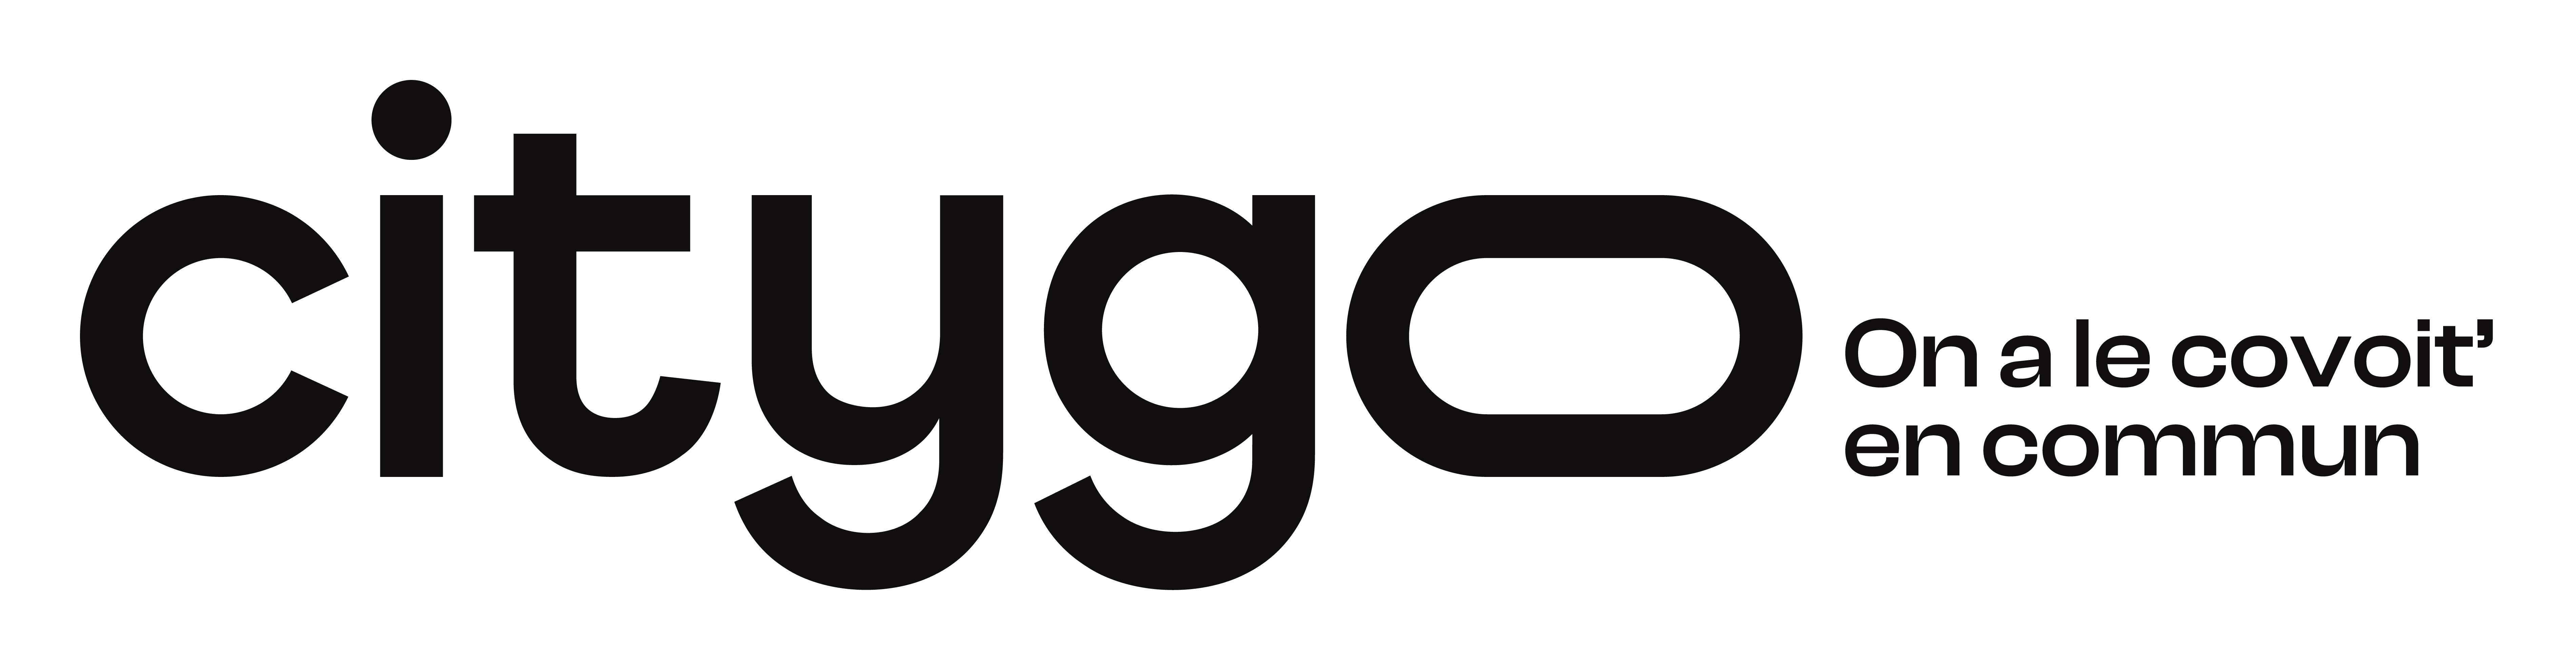 Citygo logo+baseline horizontal noir rvb.png